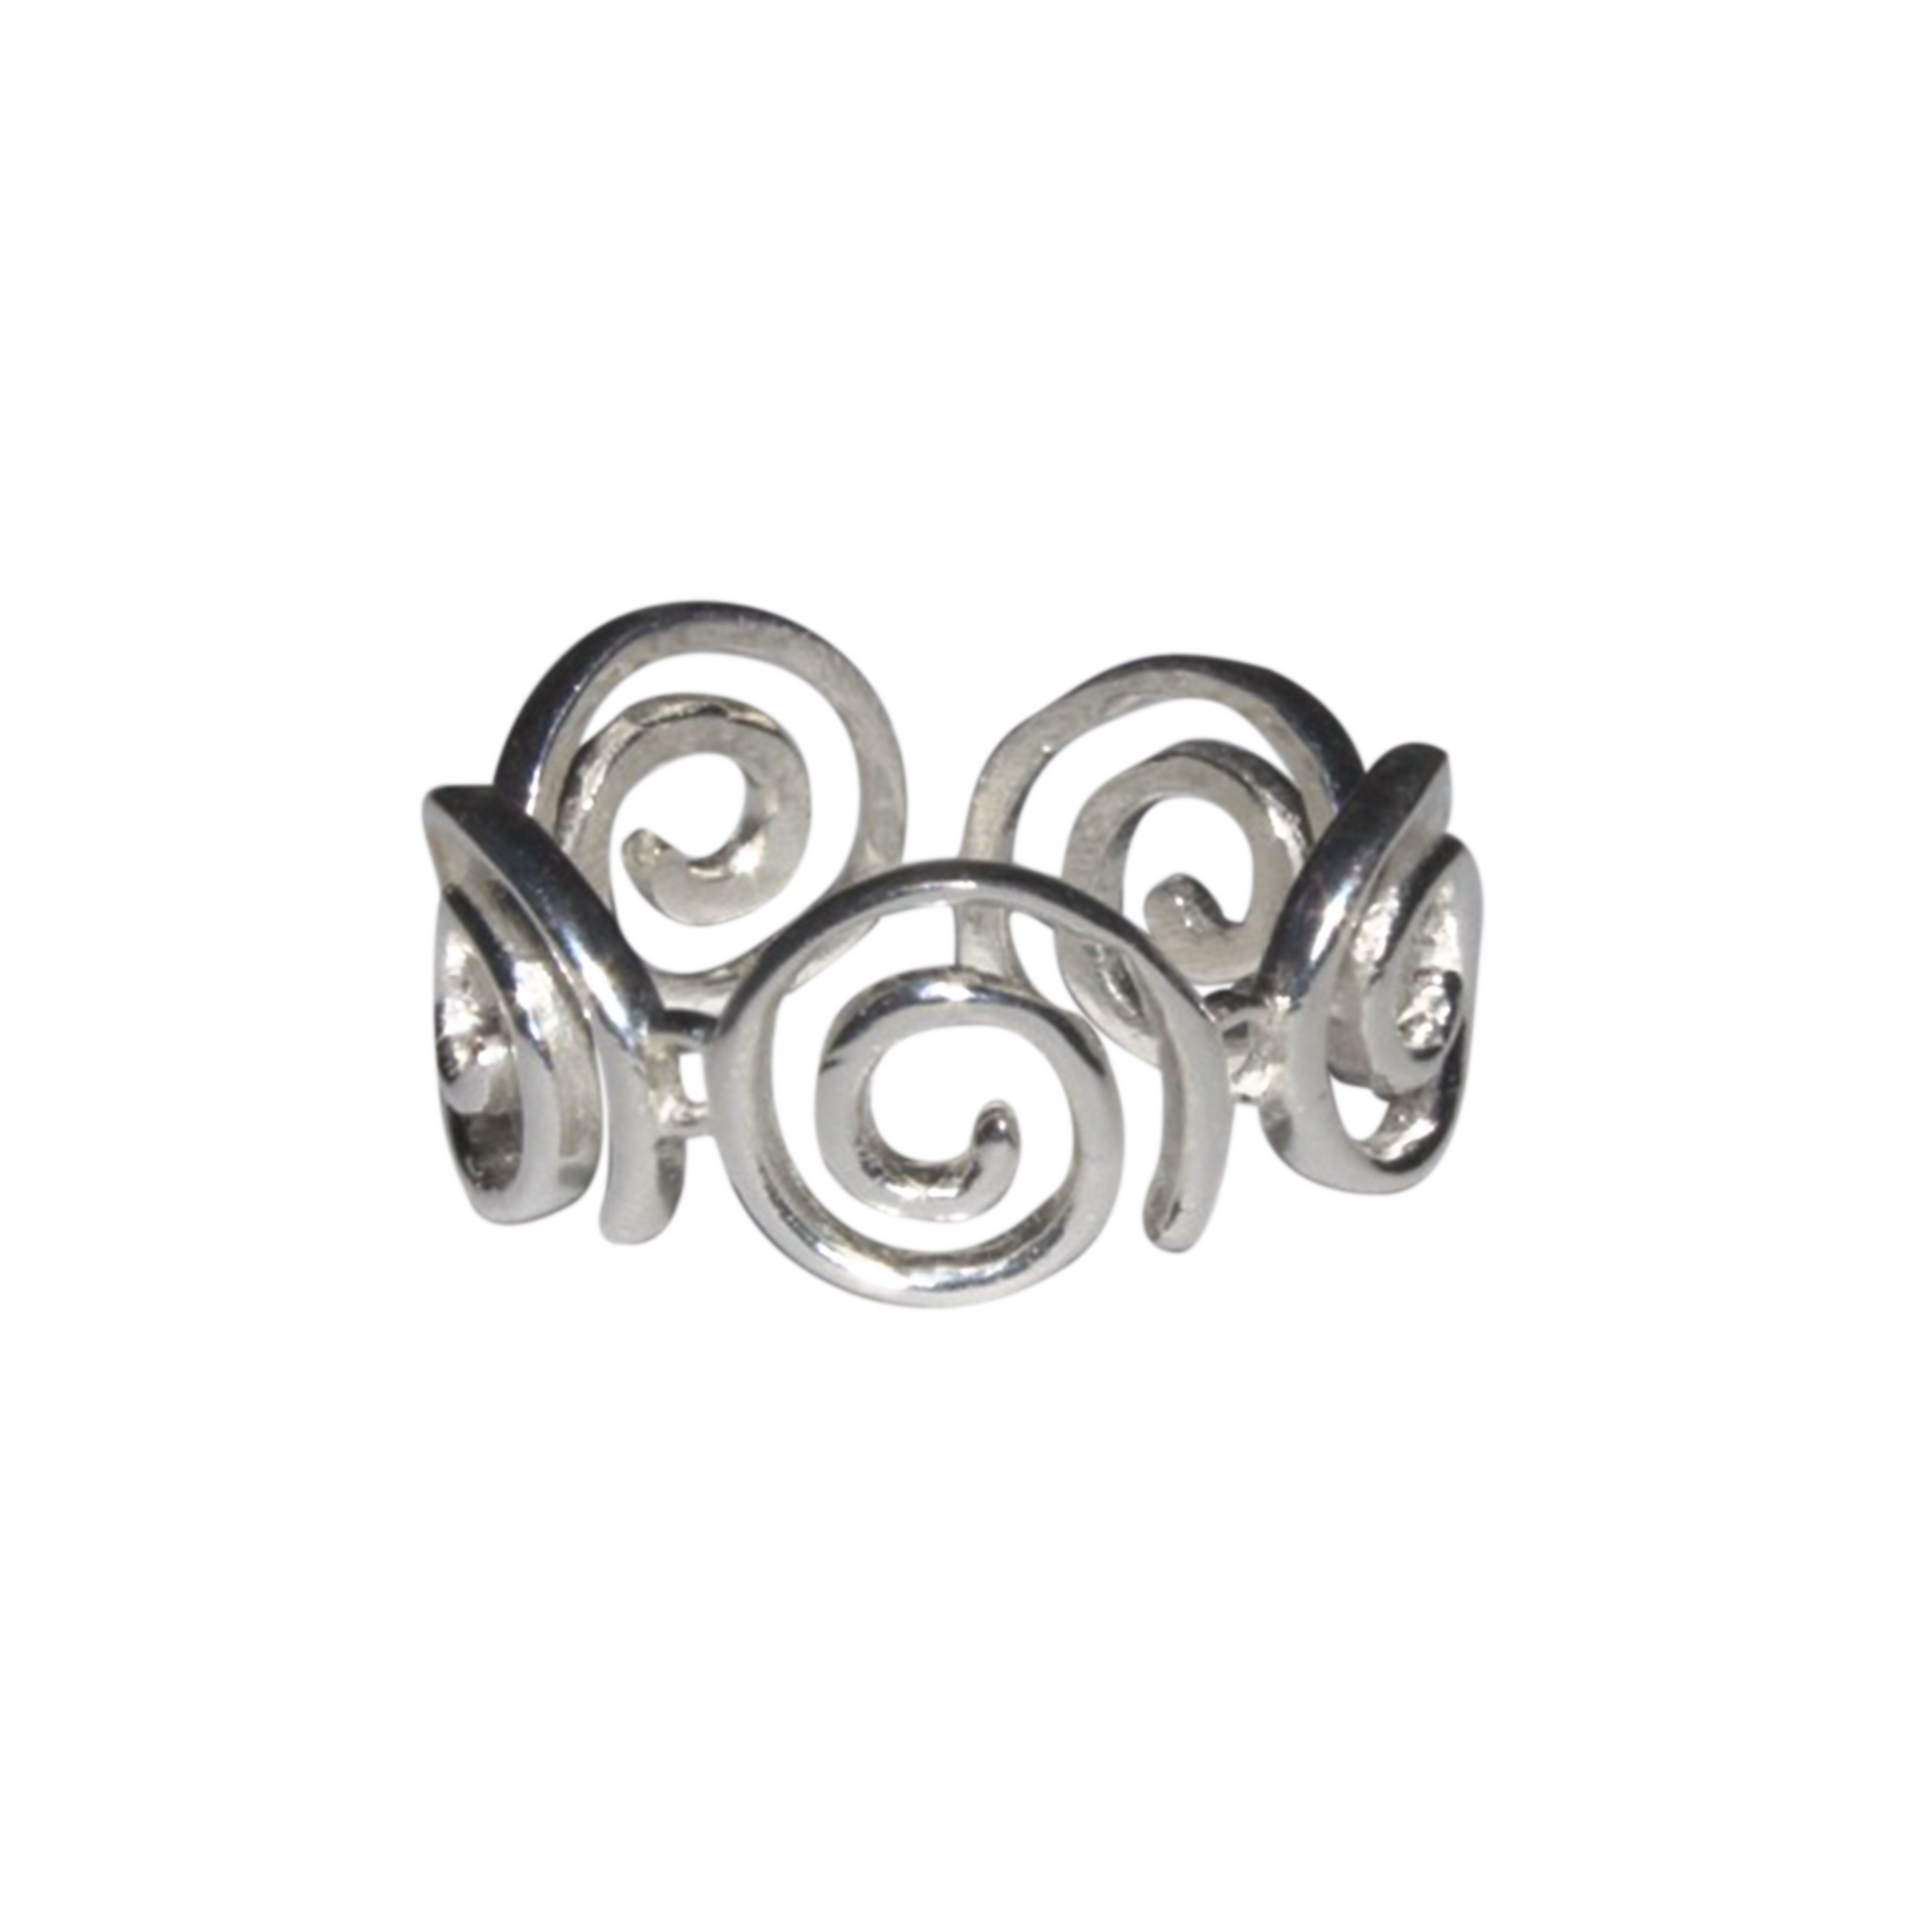 Spiral Chain Ring